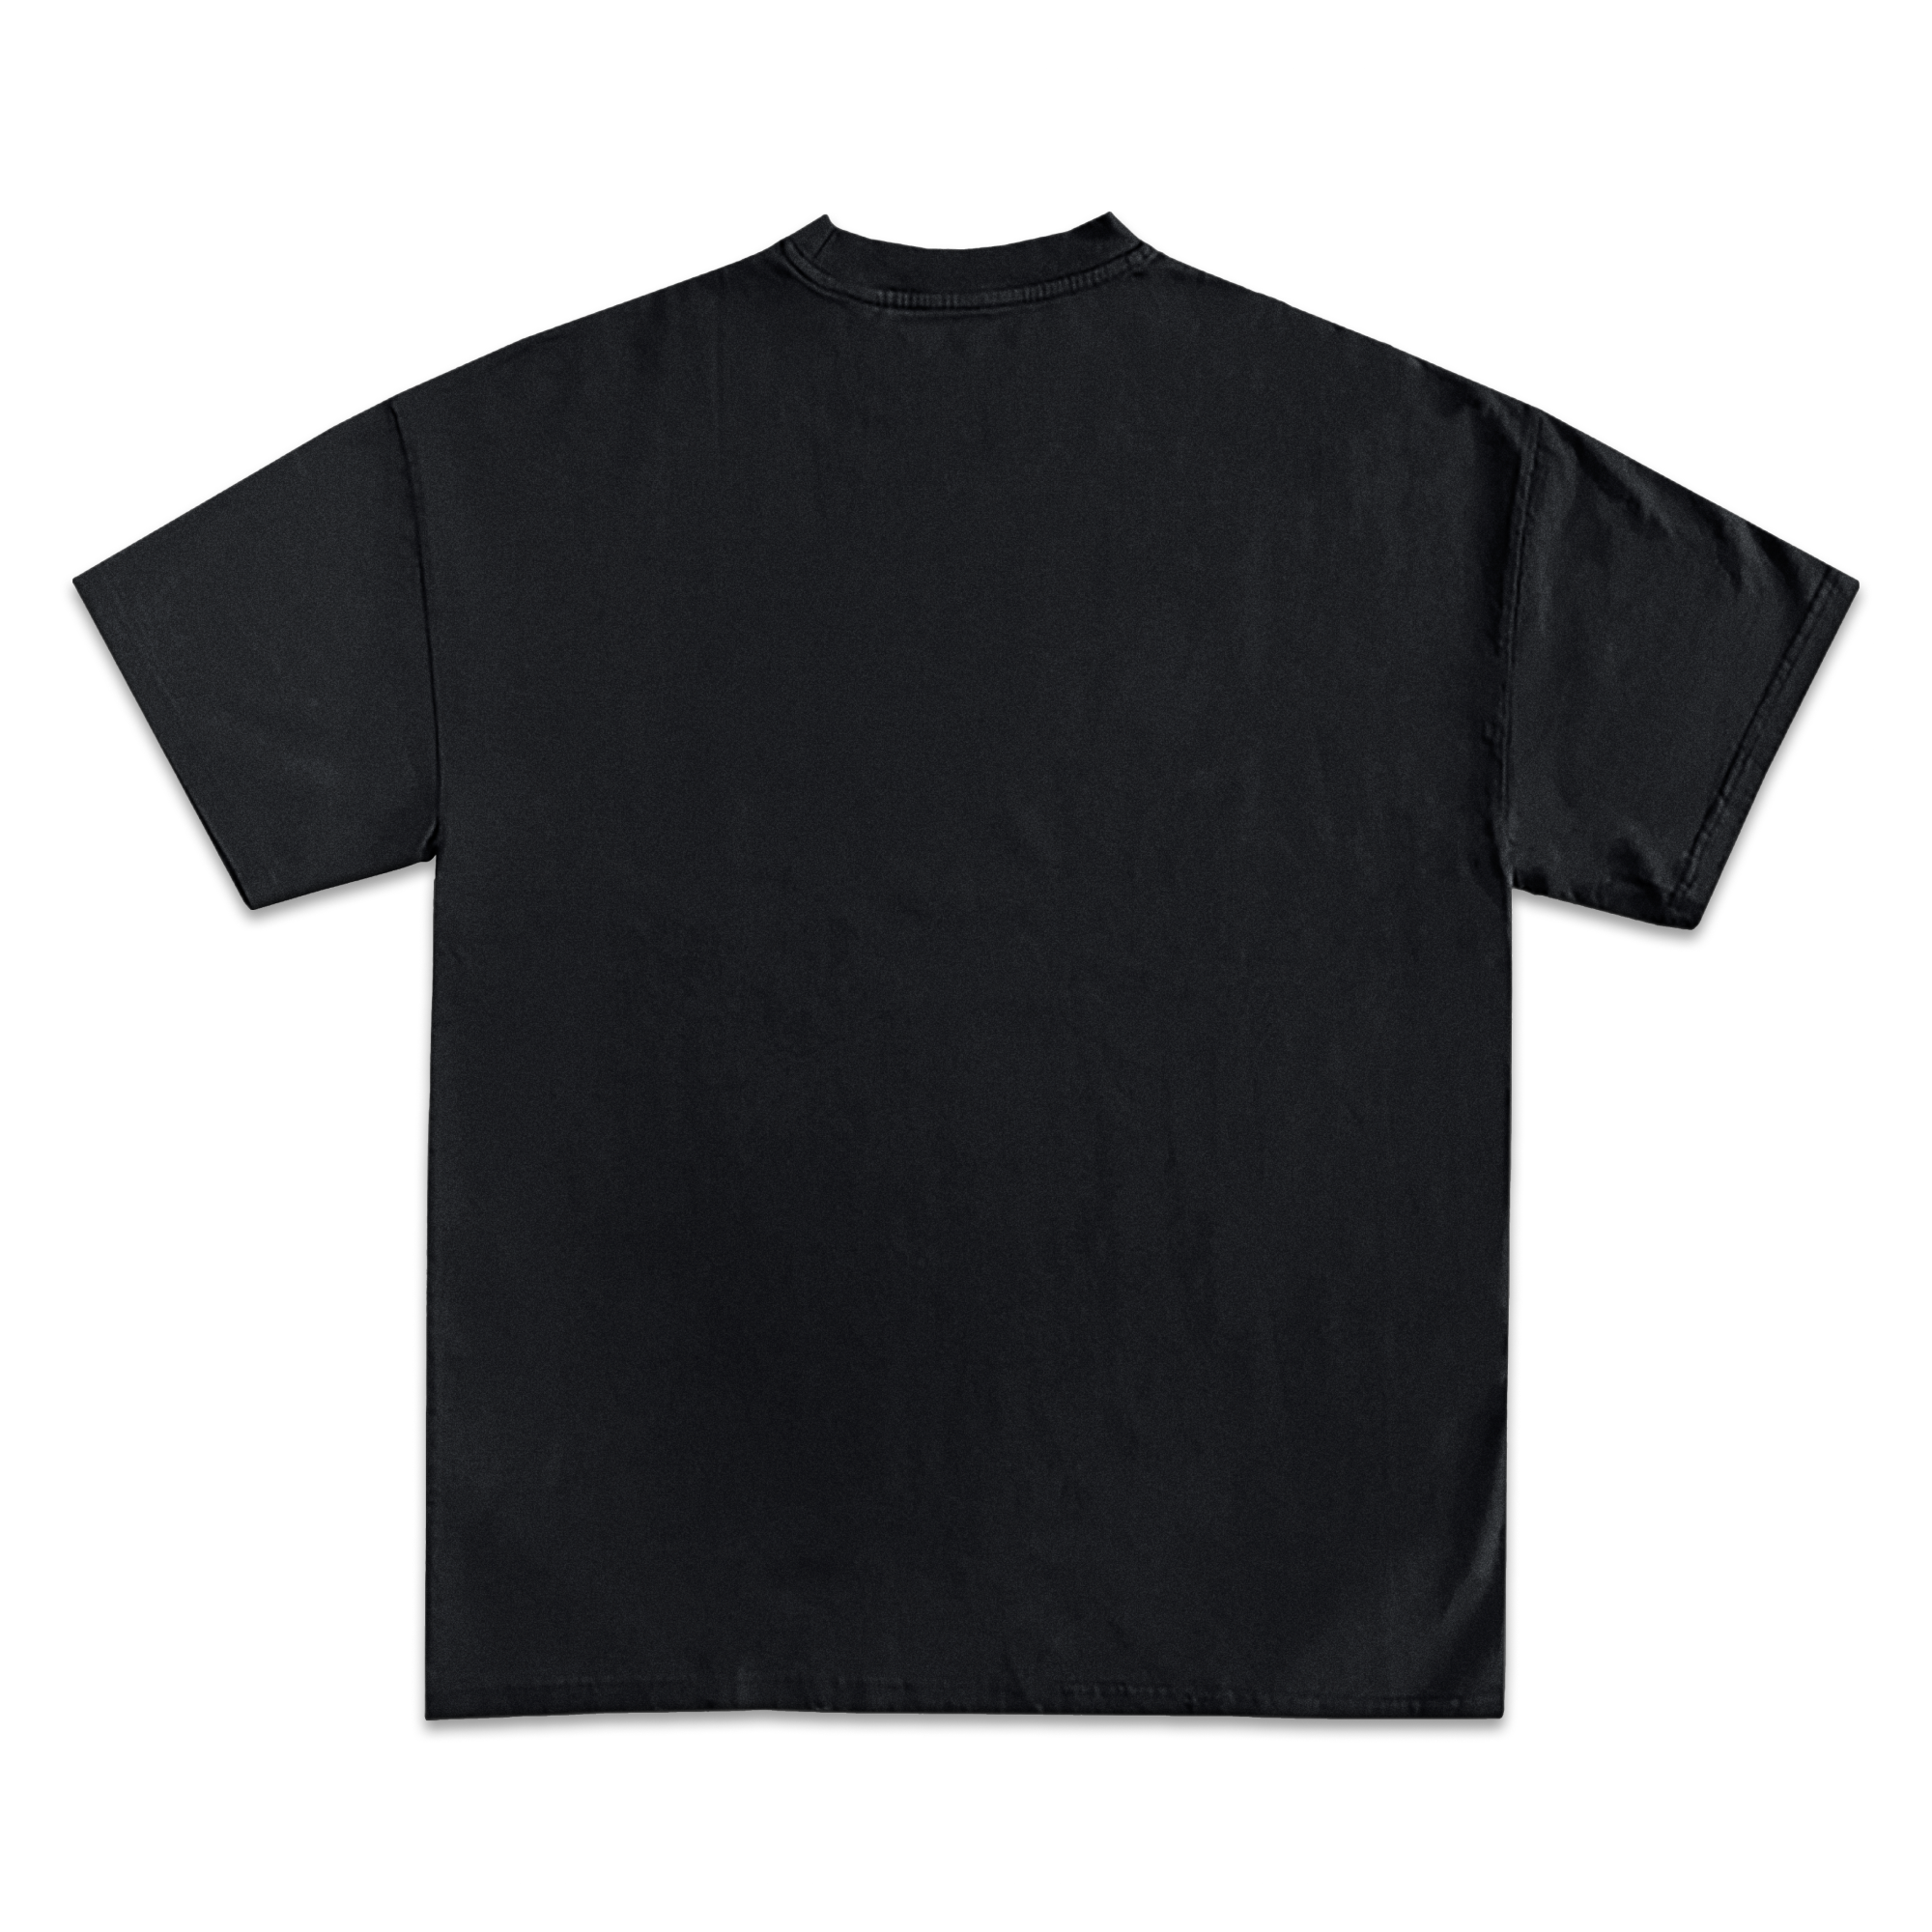 Lil Durk Jumbo Graphic T-Shirt